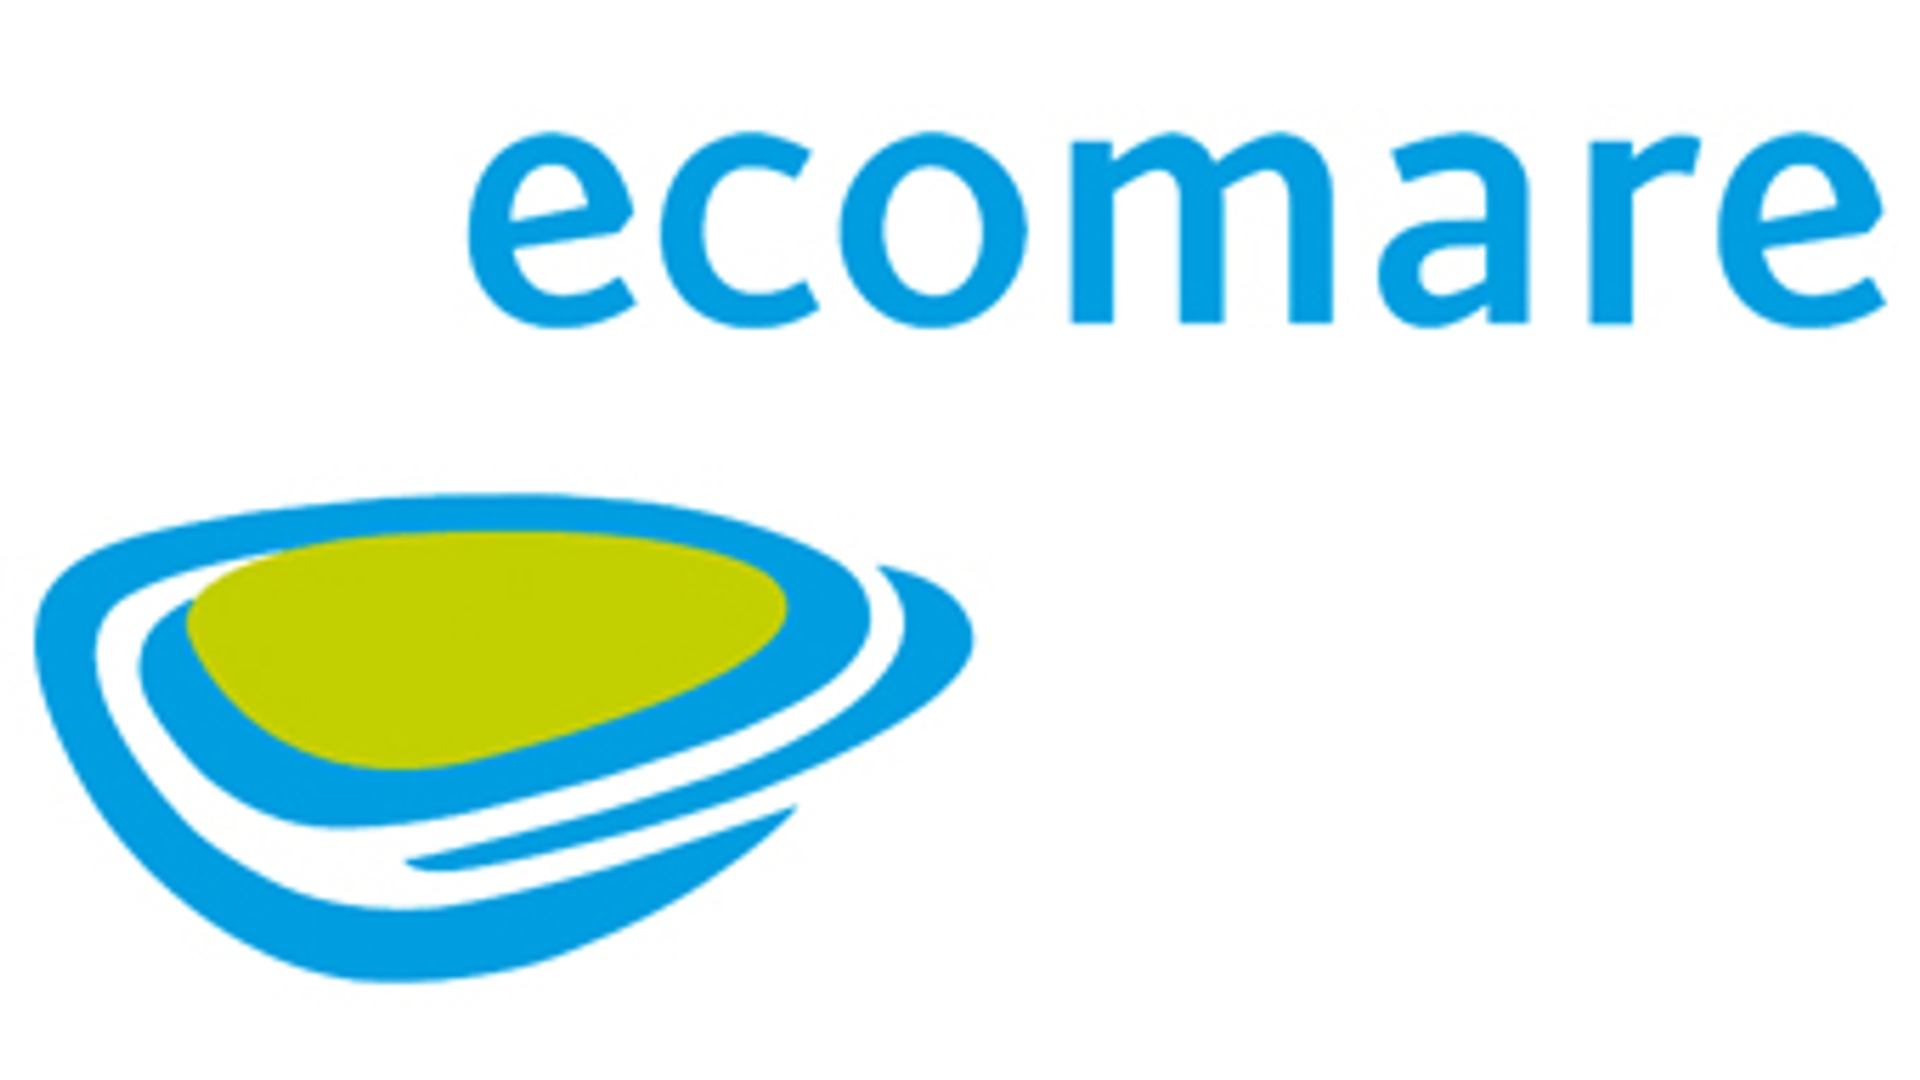 ecomare-logo-groot.jpg